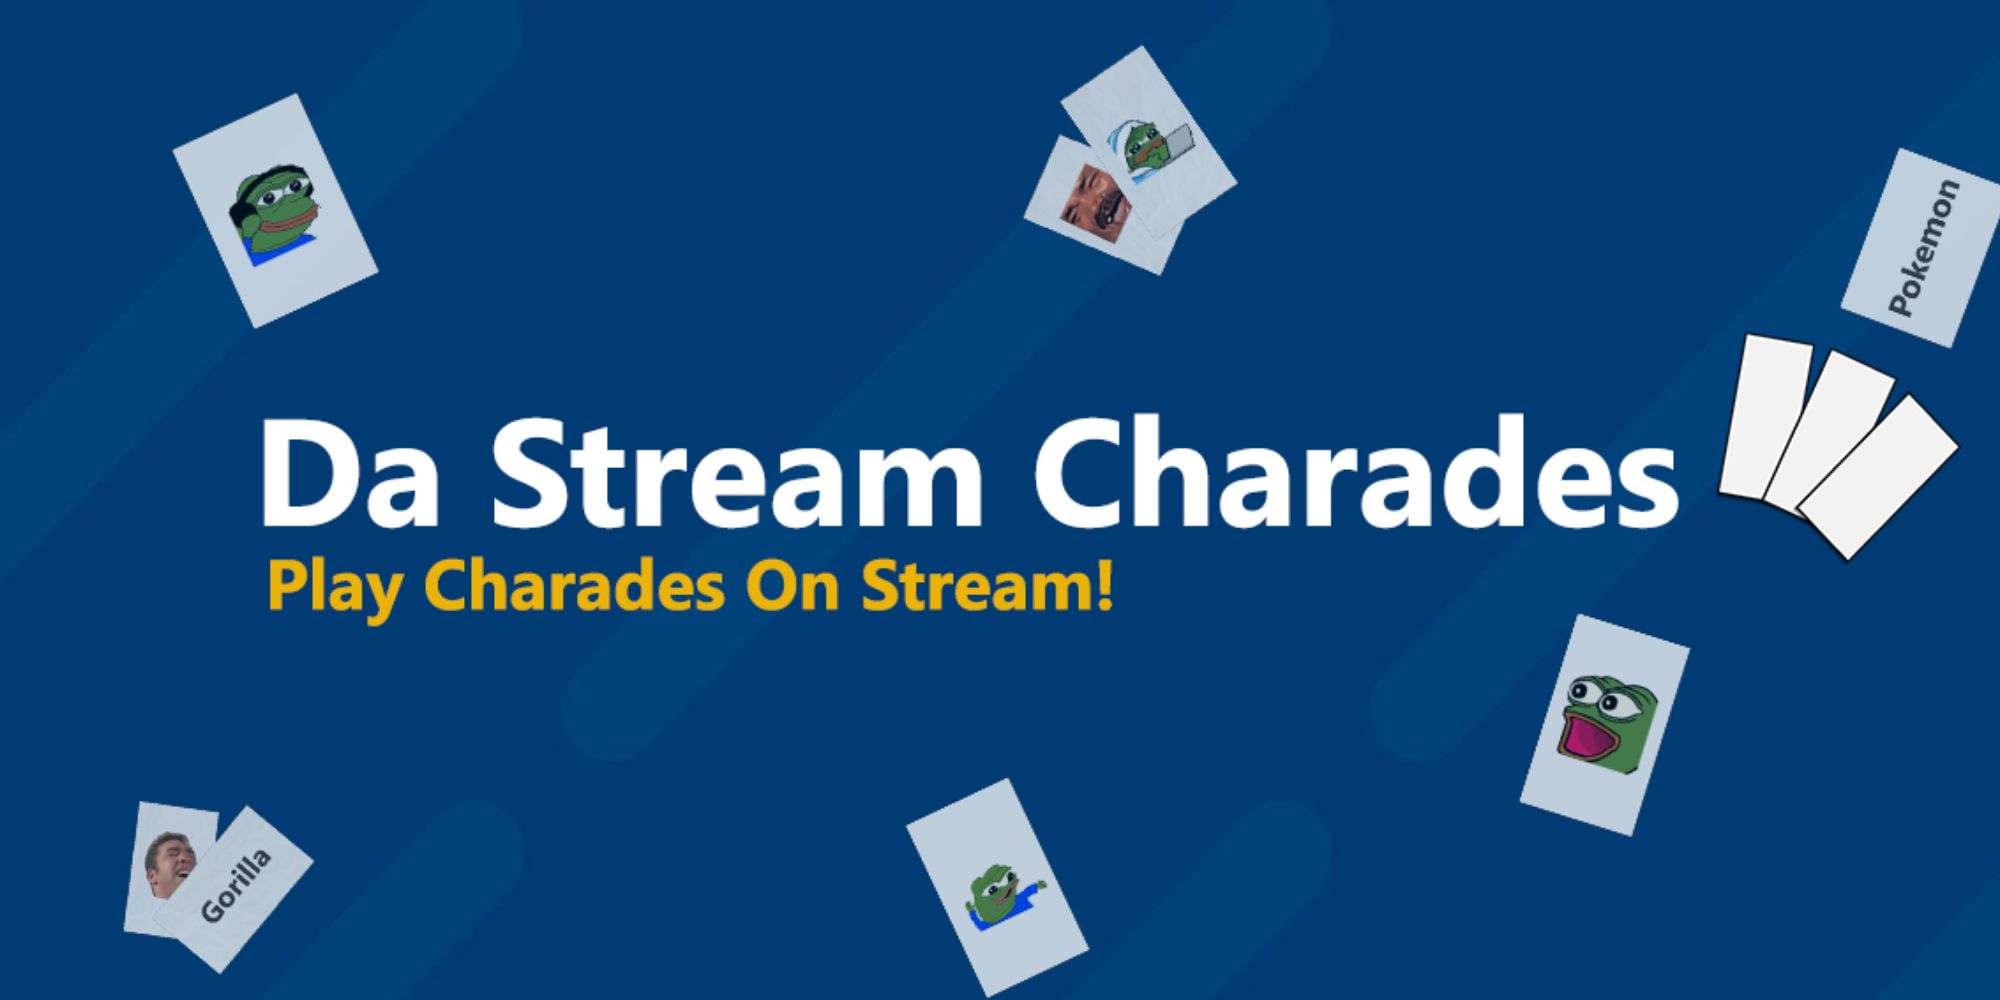 Promotional splash screen for Da Stream Charades